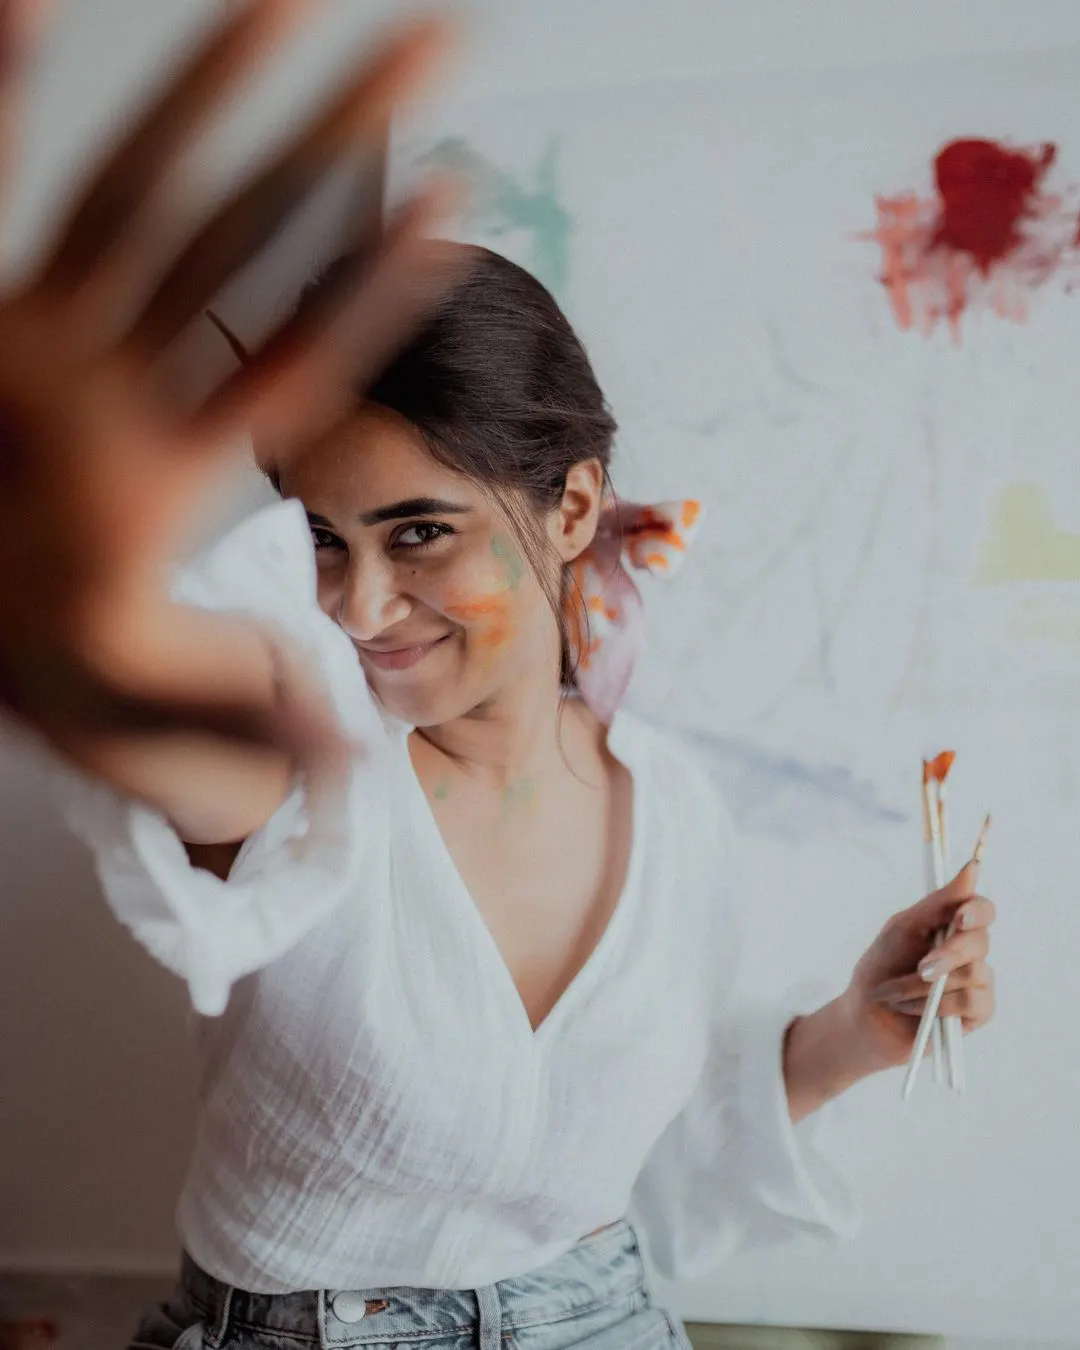 Deepti Sunaina posing for fun while painting